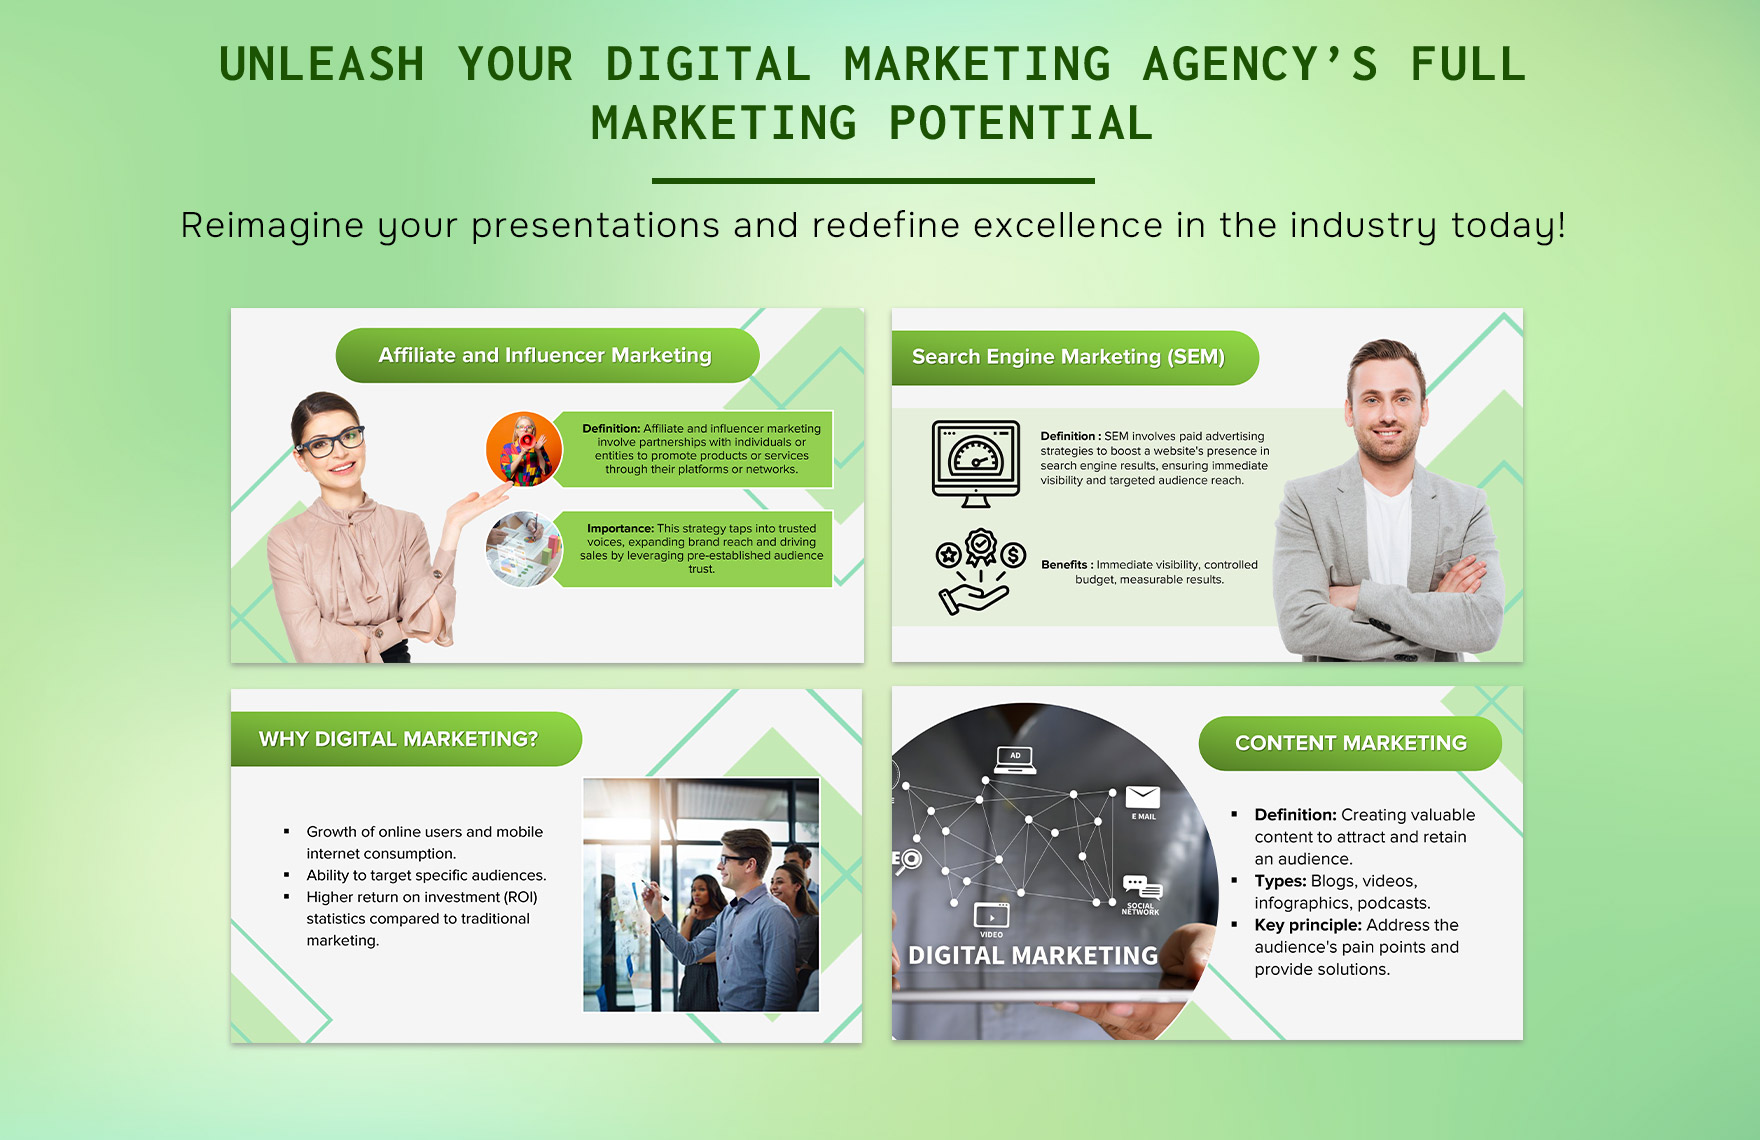 Digital Marketing Agency Marketing Training Presentation Template